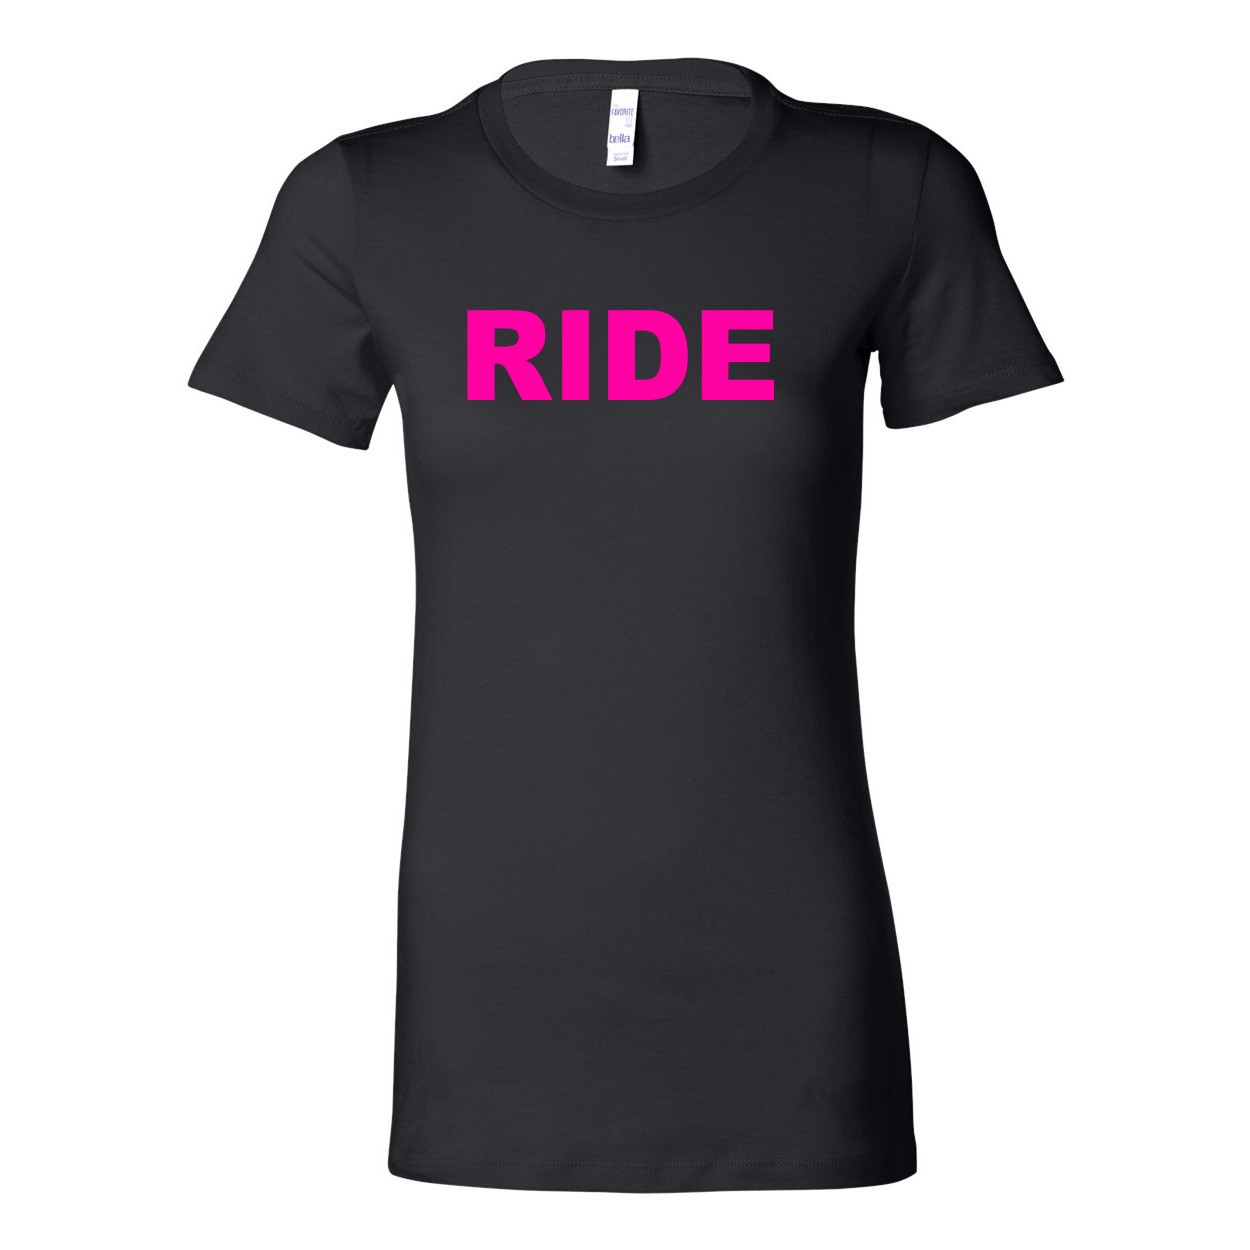 Ride Brand Logo Women's Classic Fitted Tri-Blend T-Shirt Black (Pink Logo)